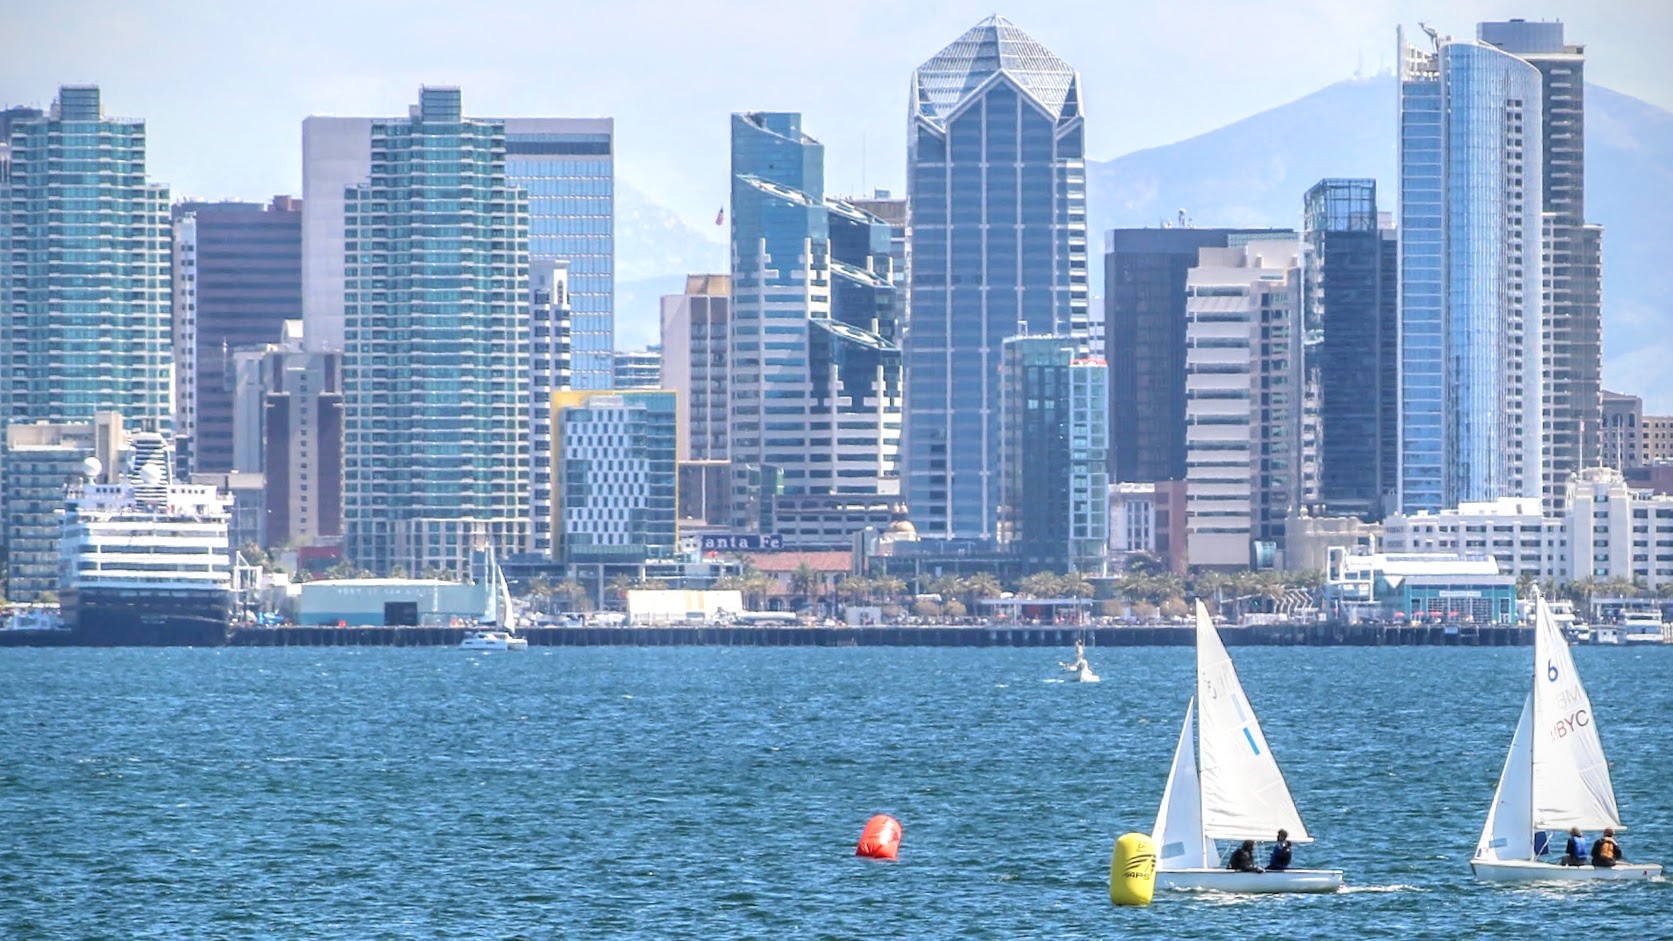 Nikhil & Obi rounding a mark in 2018 SoCal5 regatta. San Diego, CA